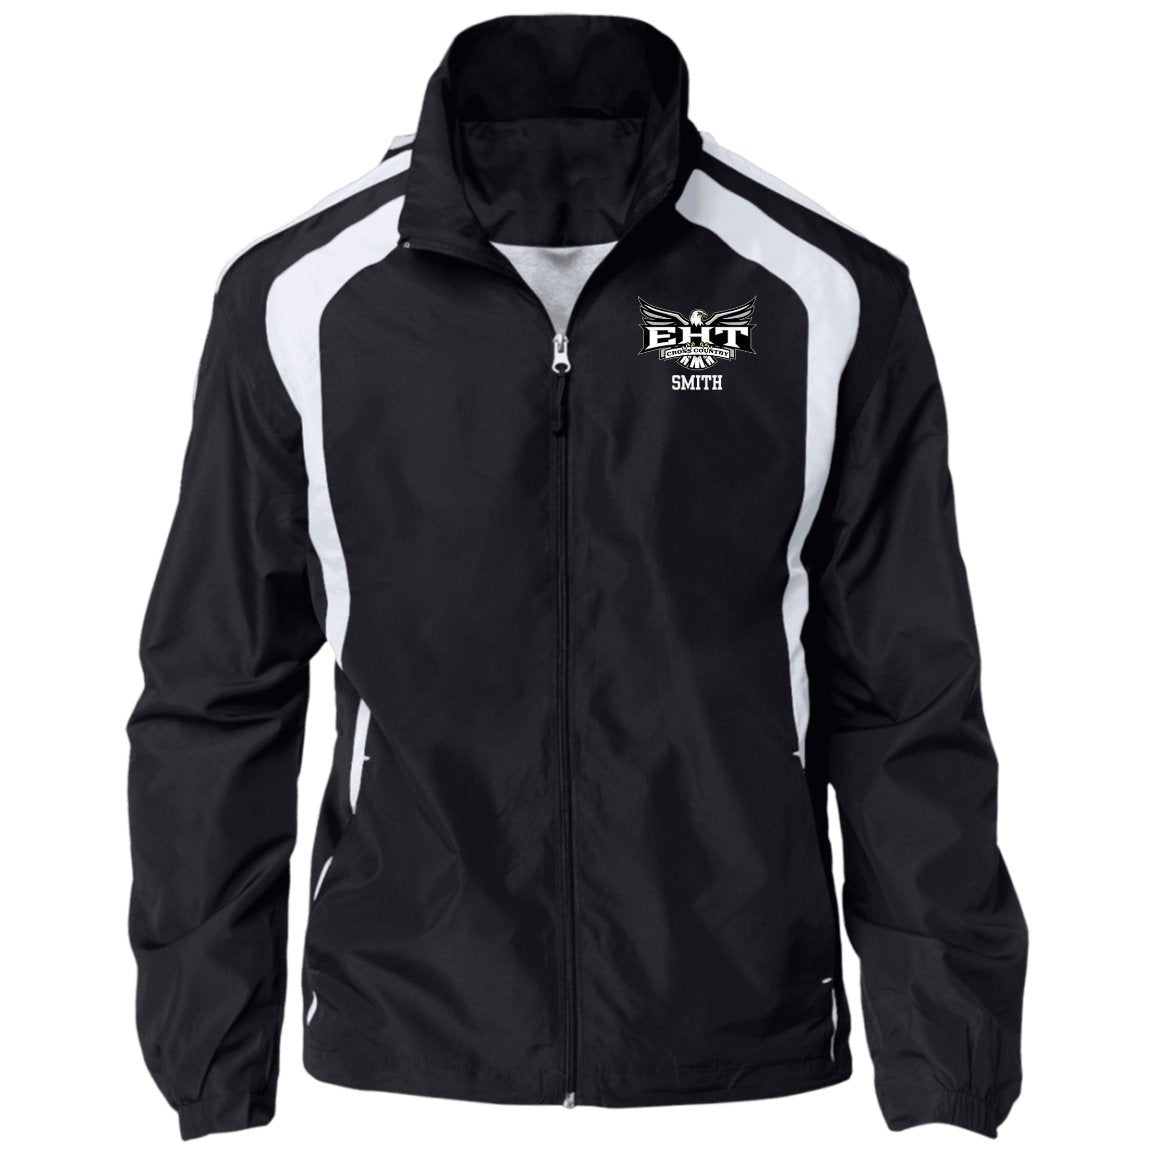 EHTXC Jersey-Lined Raglan Jacket